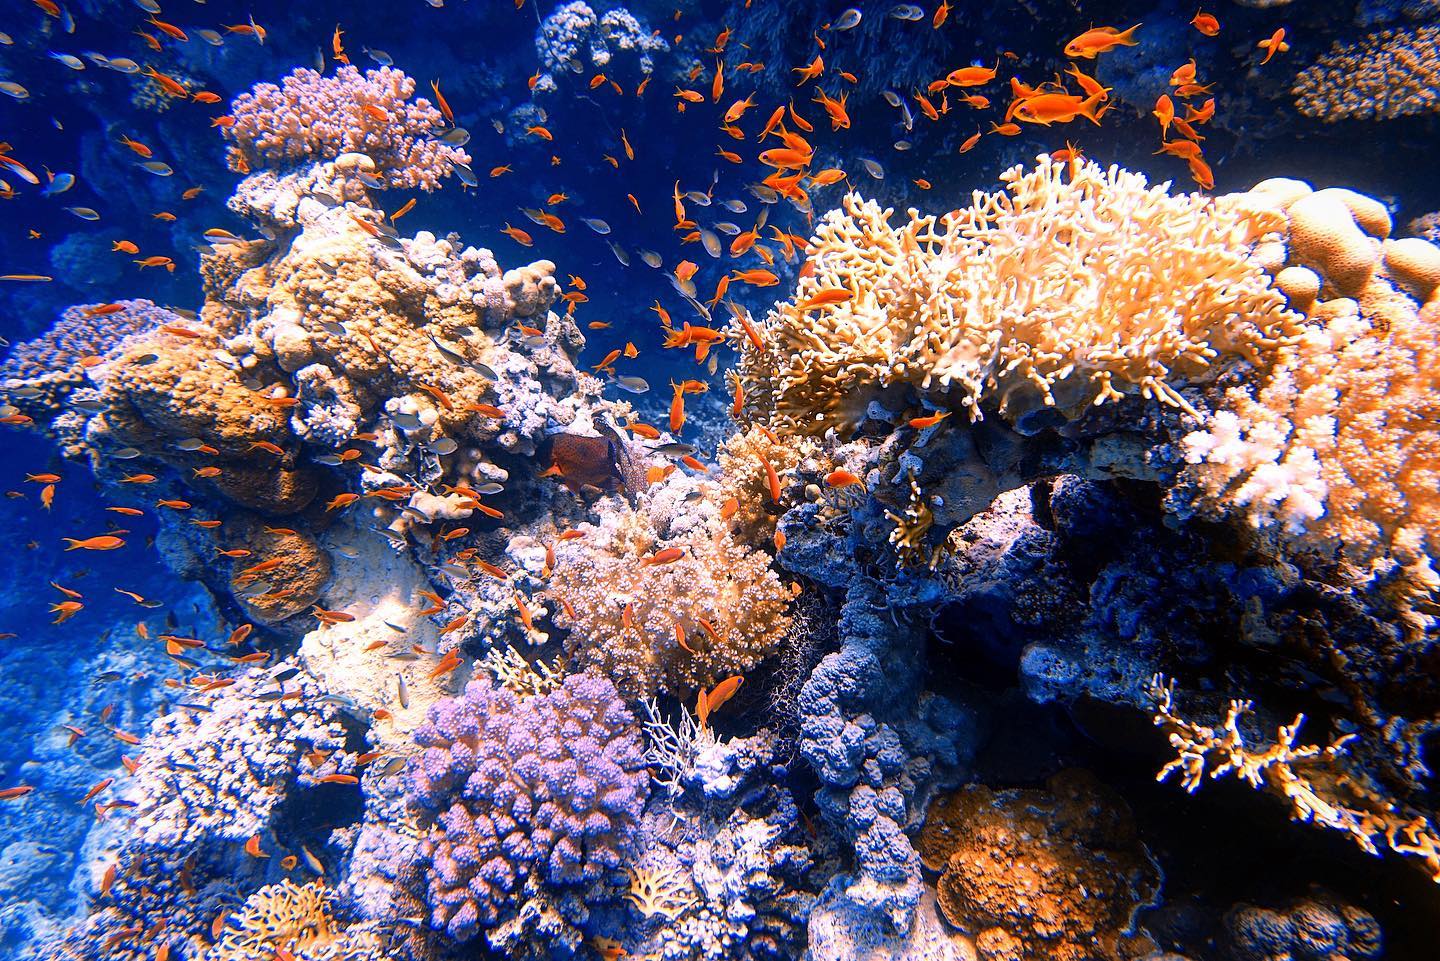 It's so colorful under water 🎨
.
.
#furyshoals #egypt #coral #coralreef #reef #redsea #diving #dive #ägypten #tauchen #rochen #mantarochen #diver #divers #sonyrx100mk3 #sea #scuba #scubadiving #mares #travel #traveler #travelblogger #traveller #instadive #color #colorful